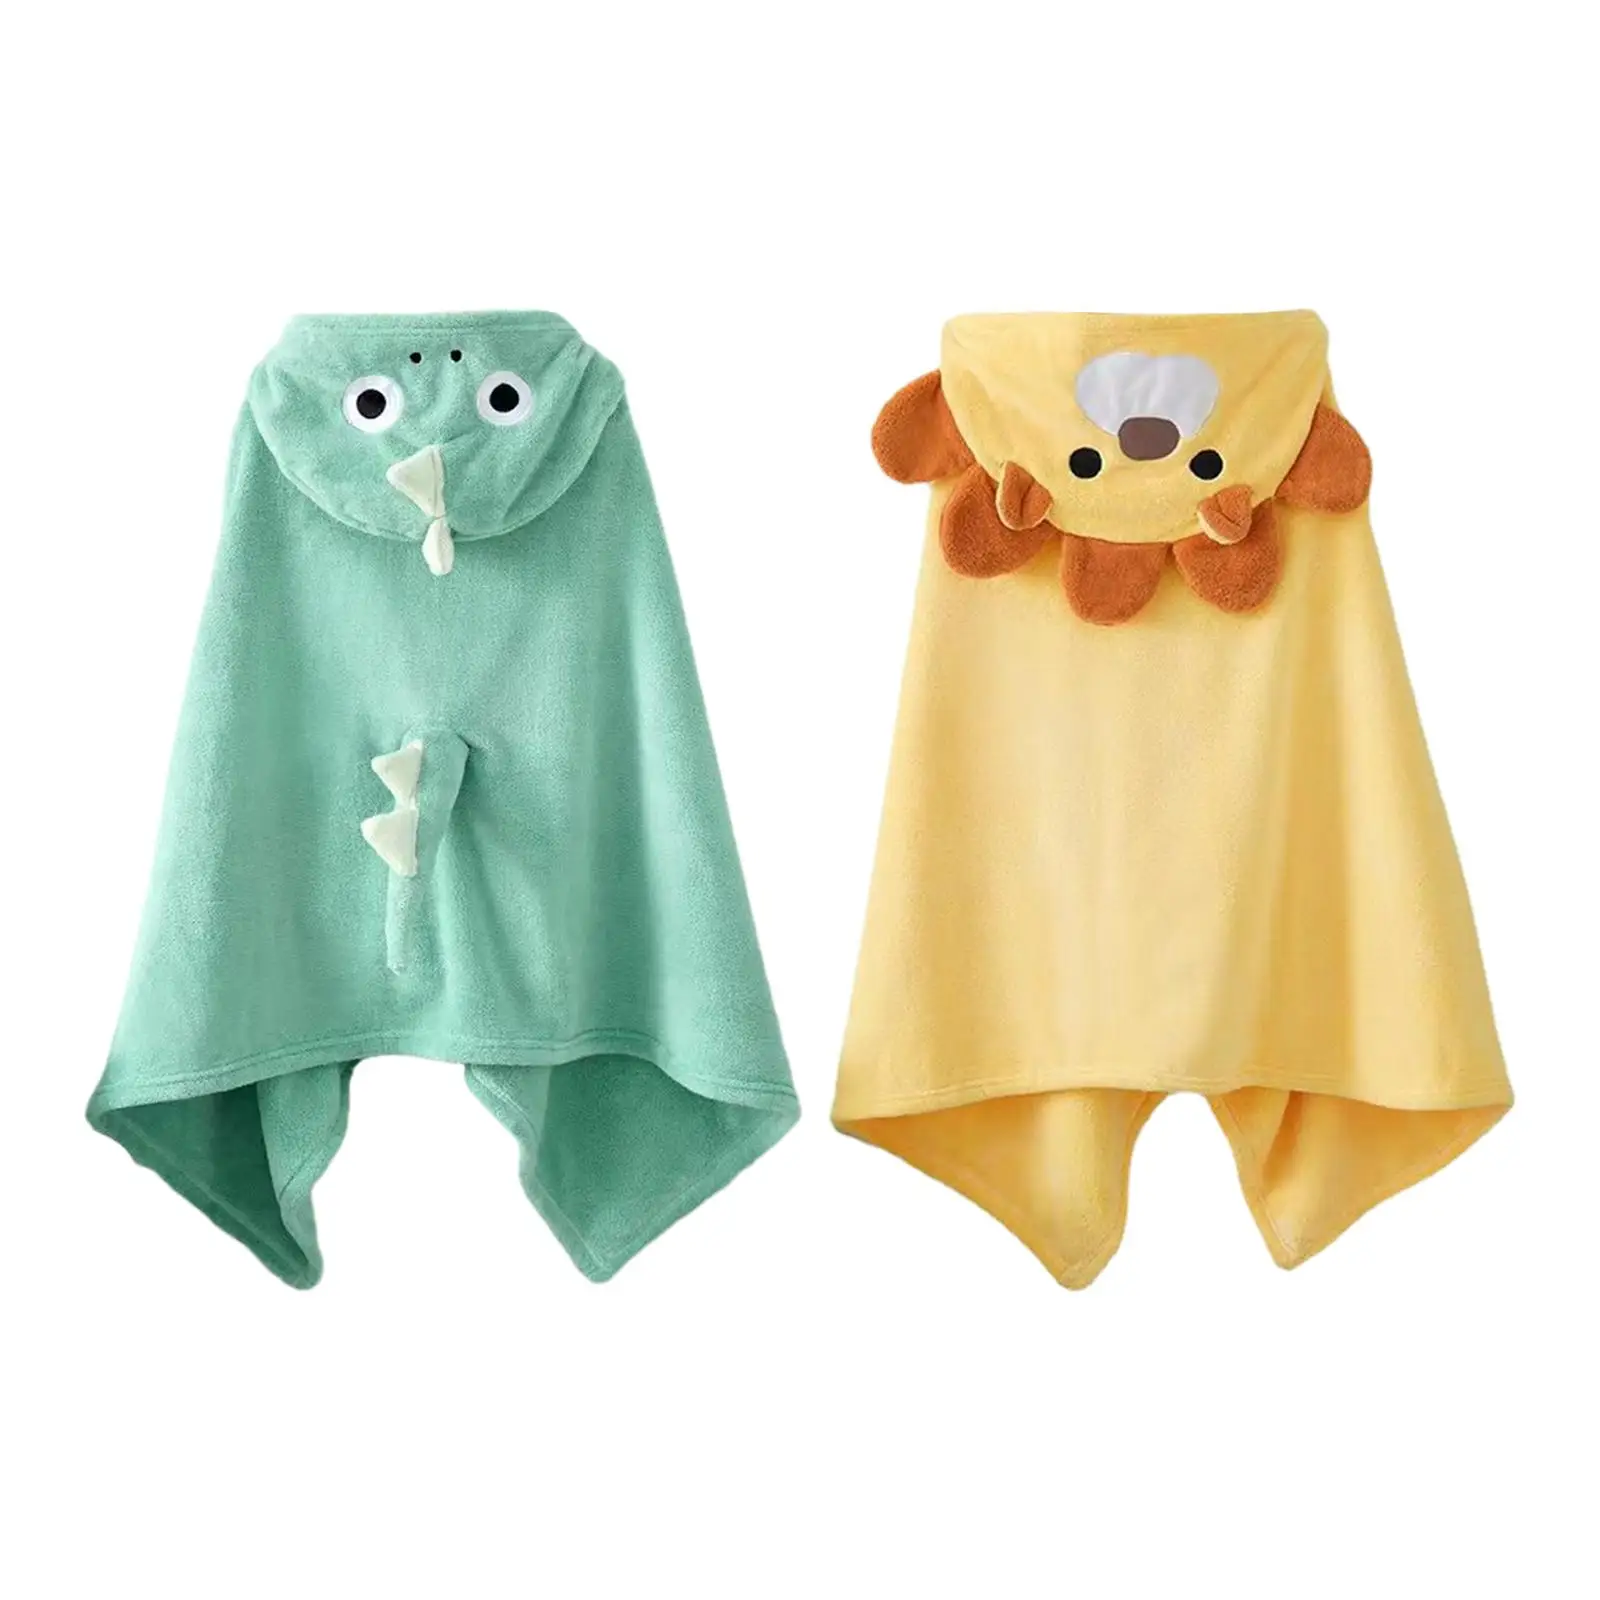 Infant Towel Blanket Accessory Nightwear for Baby Boys Girls Multi Purpose Use Baby Hooded Bathrobe Animal Bathrobe Baby Cloak